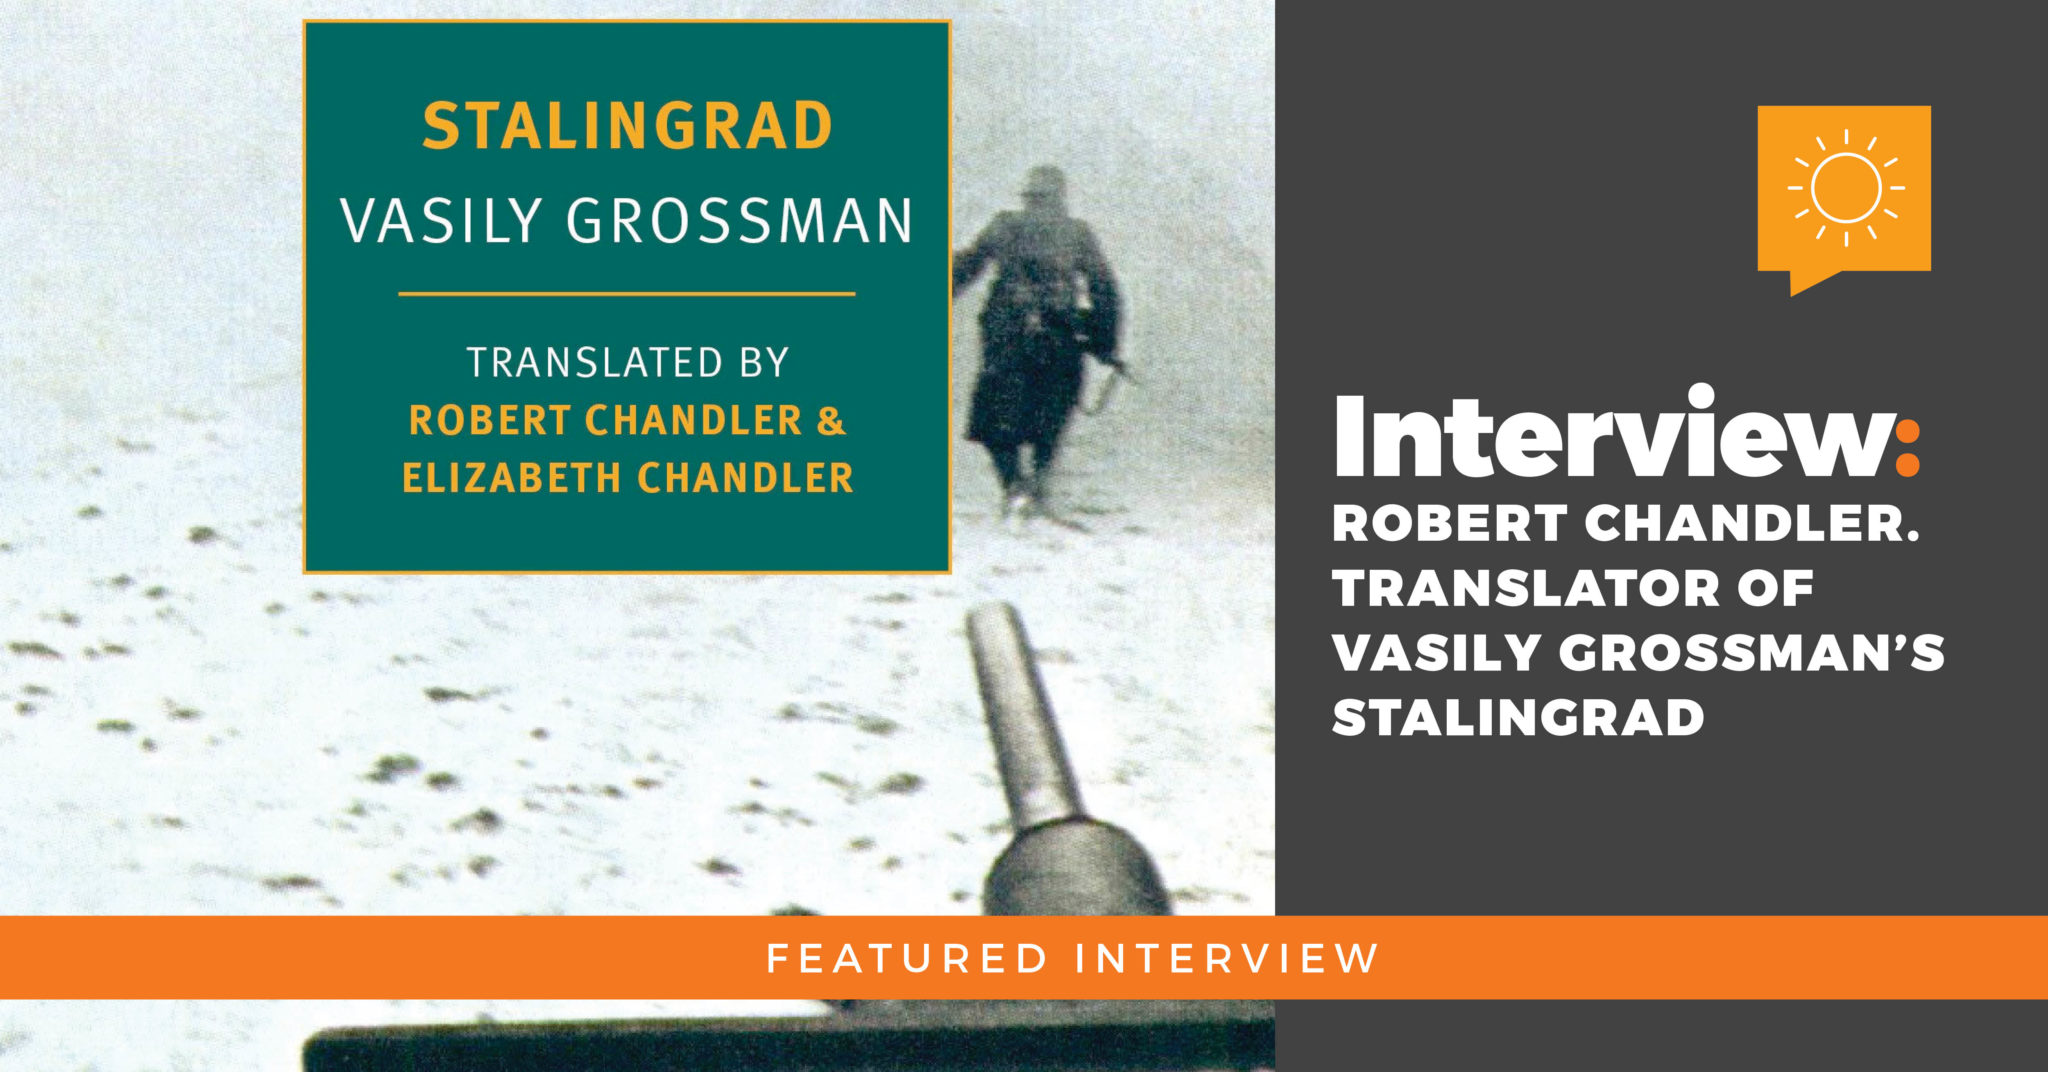 Interview: Robert Chandler. Translator of Vasily Grossman’s Stalingrad